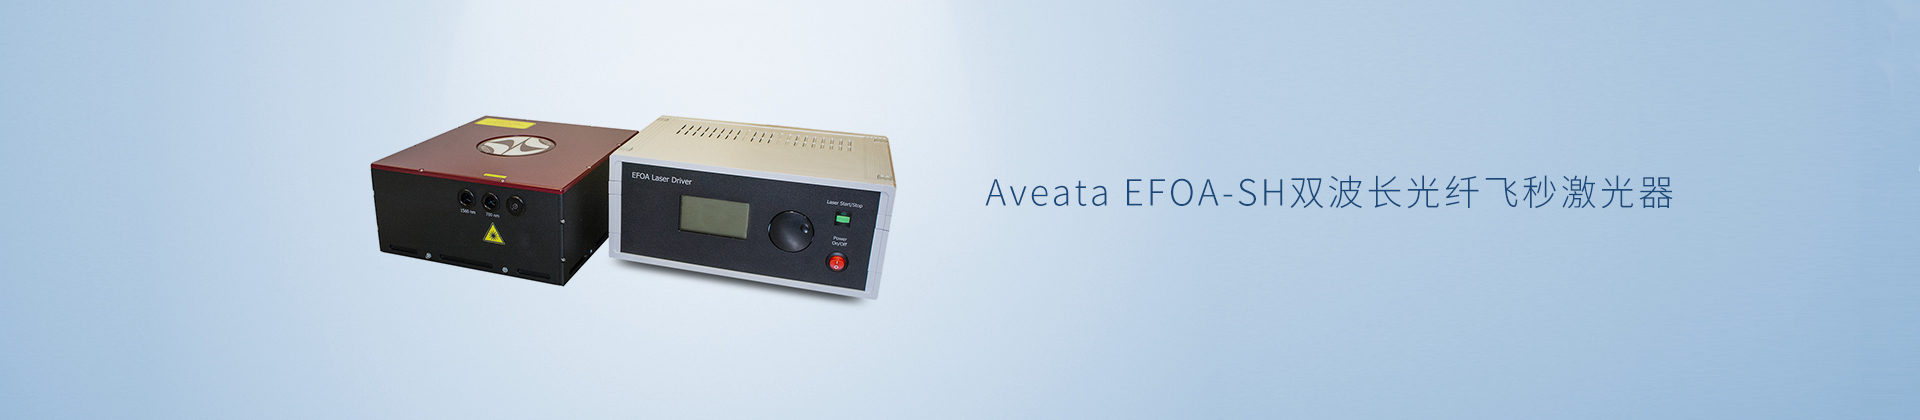 Aveata EFOA-SH双波长光纤飞秒激光器780/1560nm